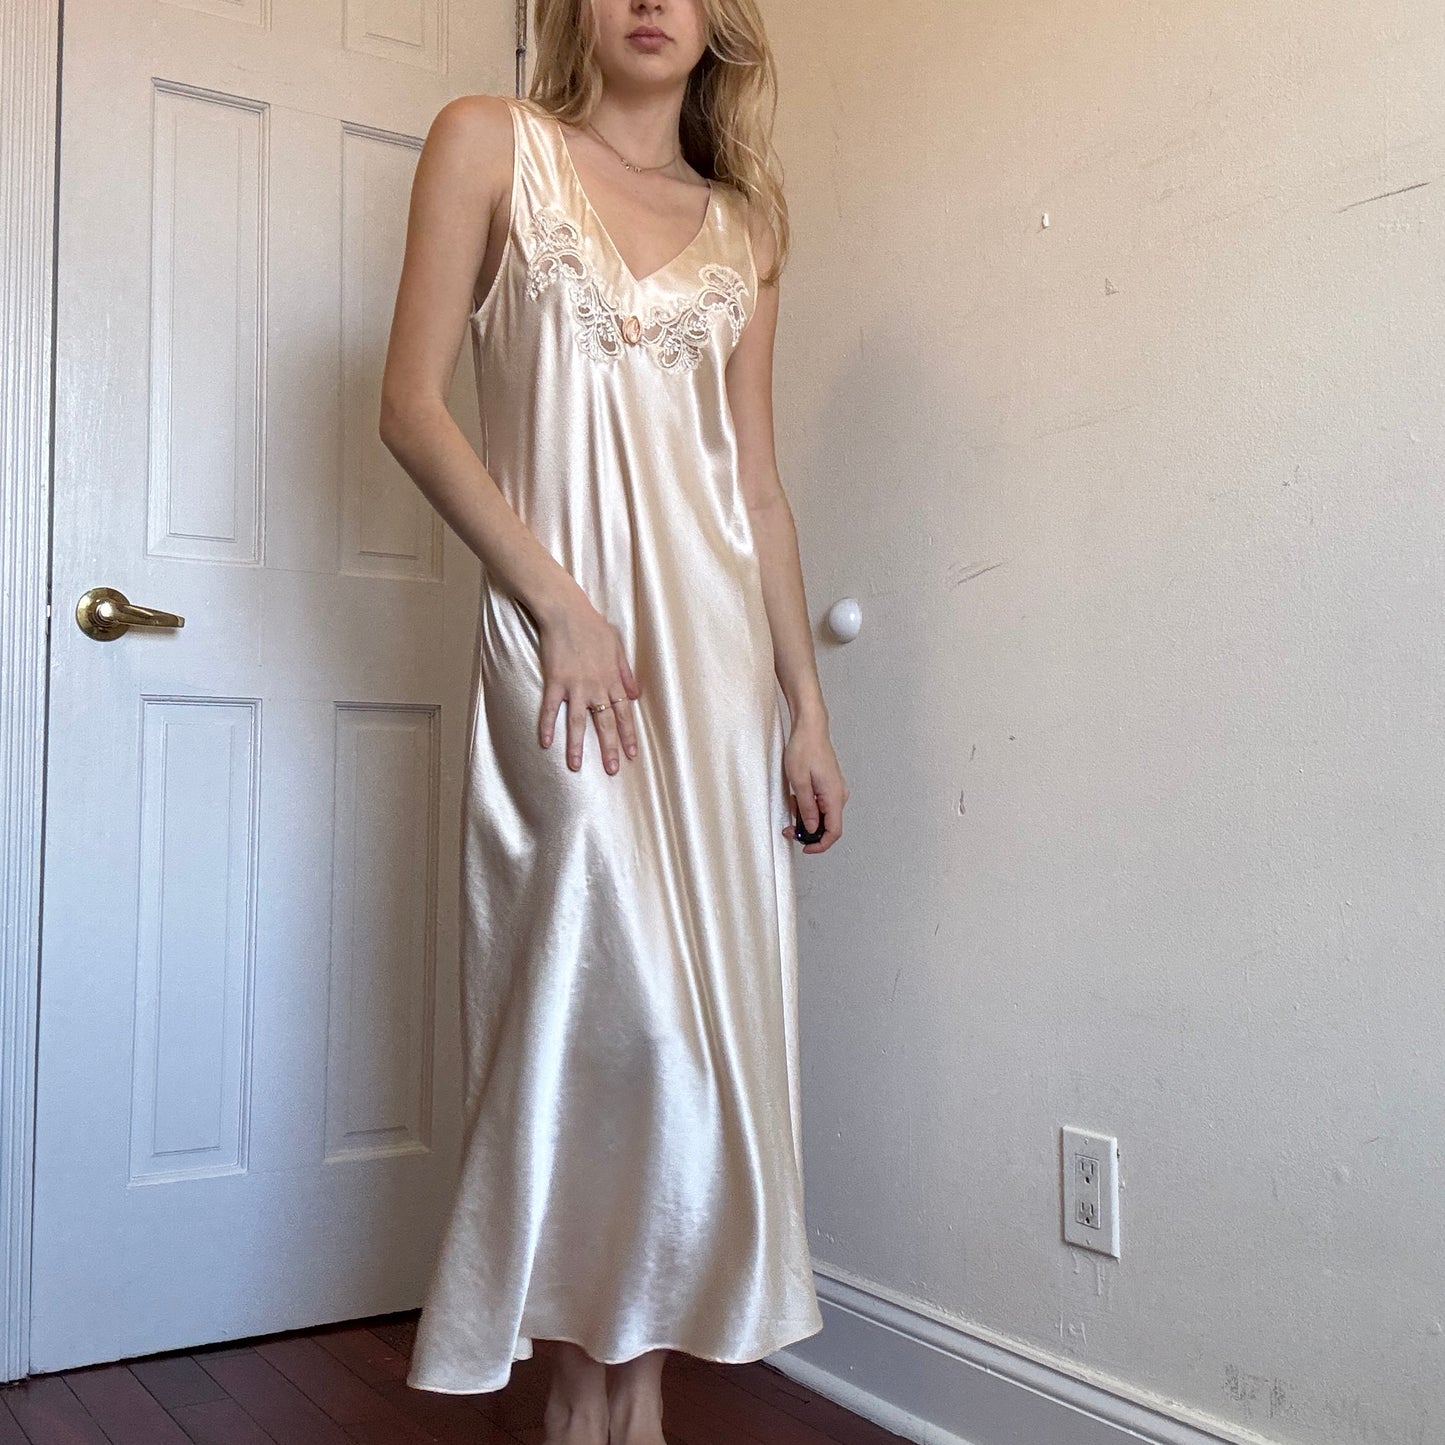 Dior Cream Lace Slip Dress